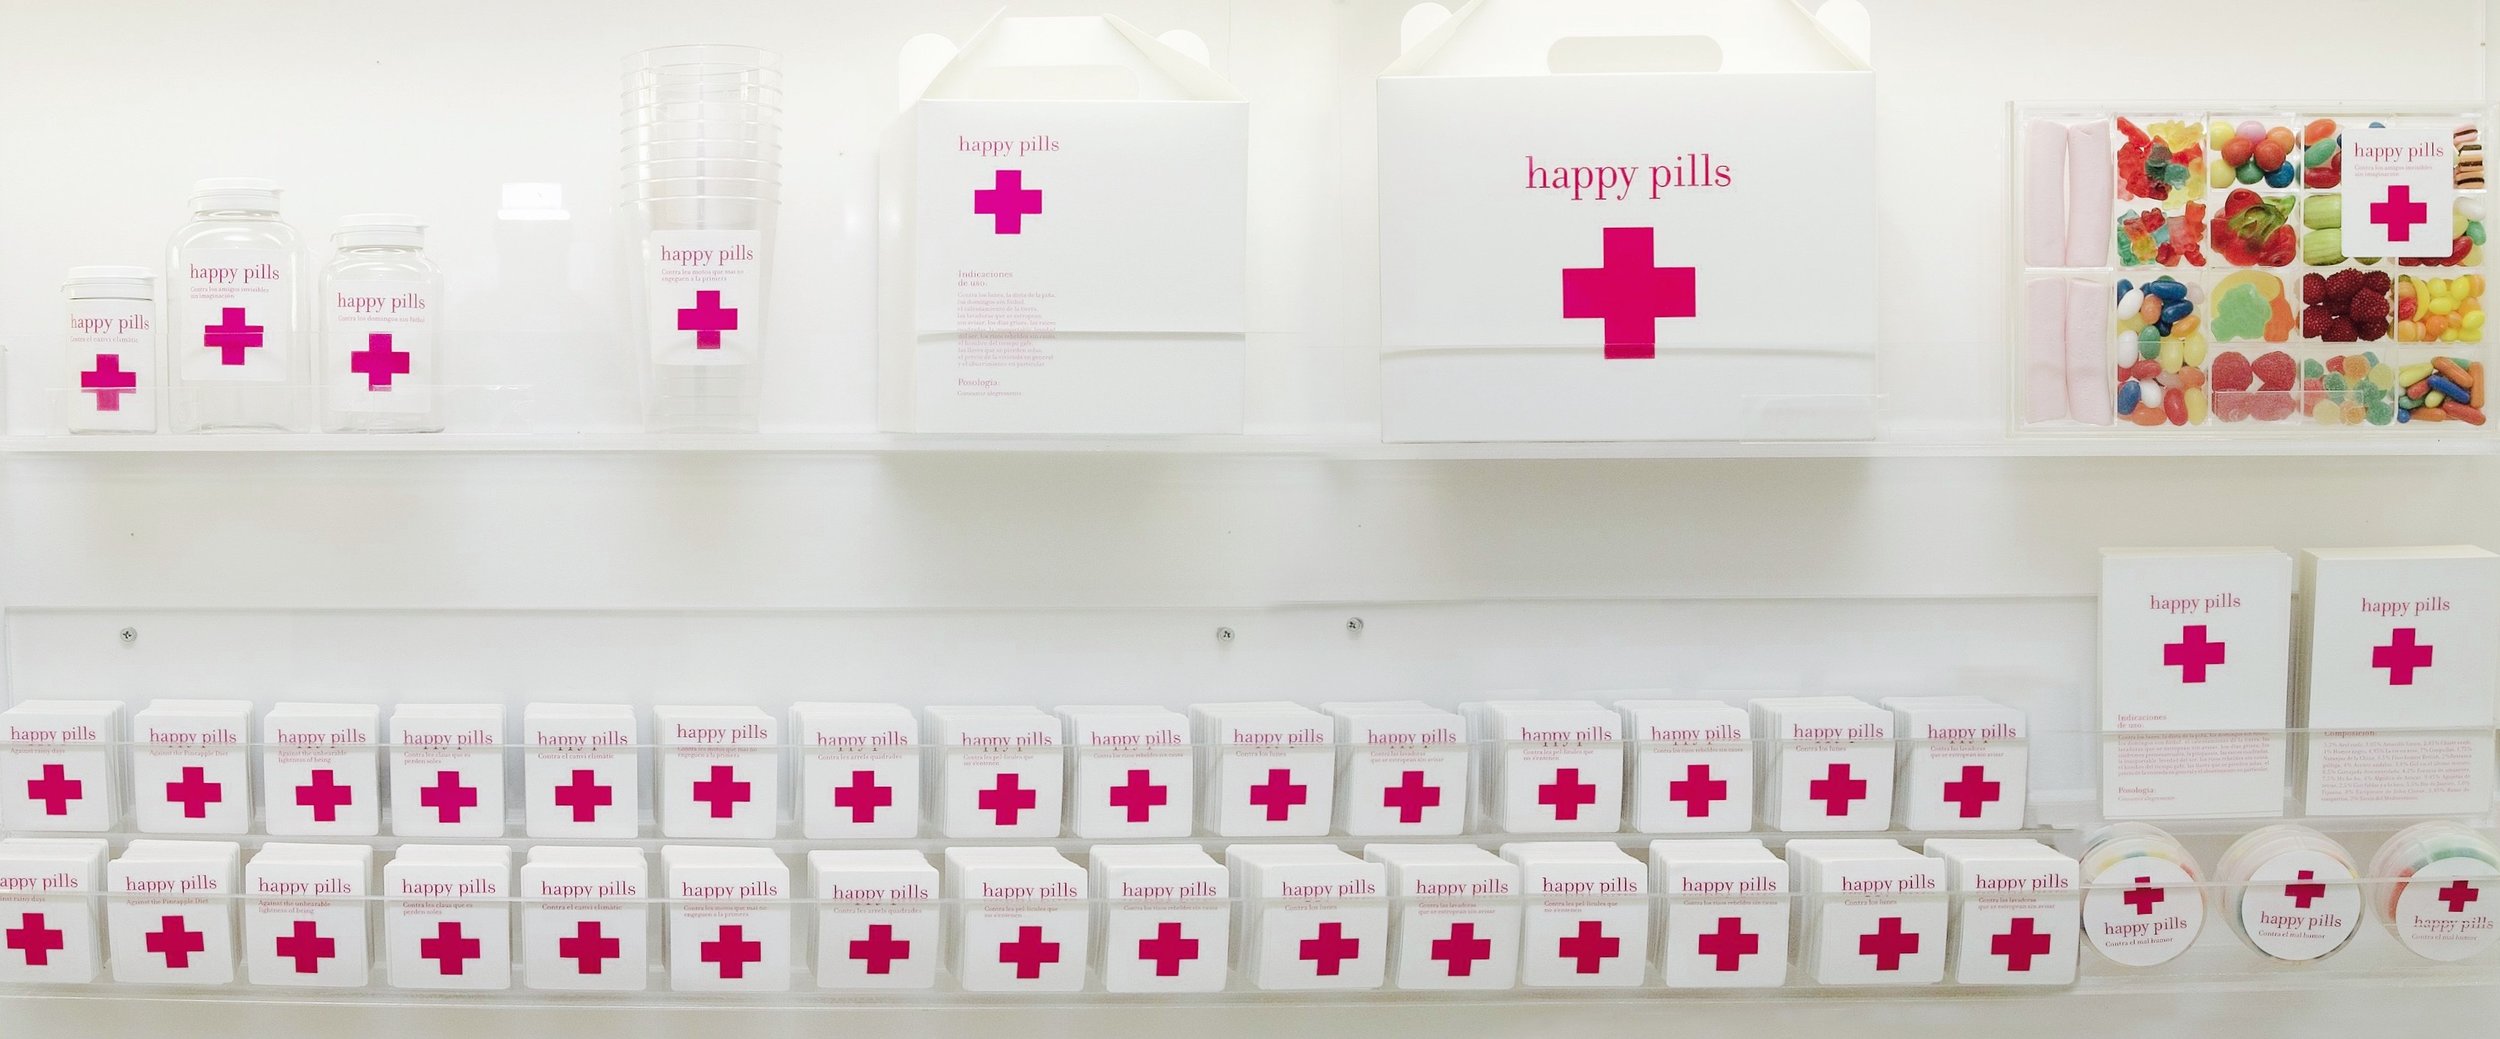 happy pills 09 (1).jpg